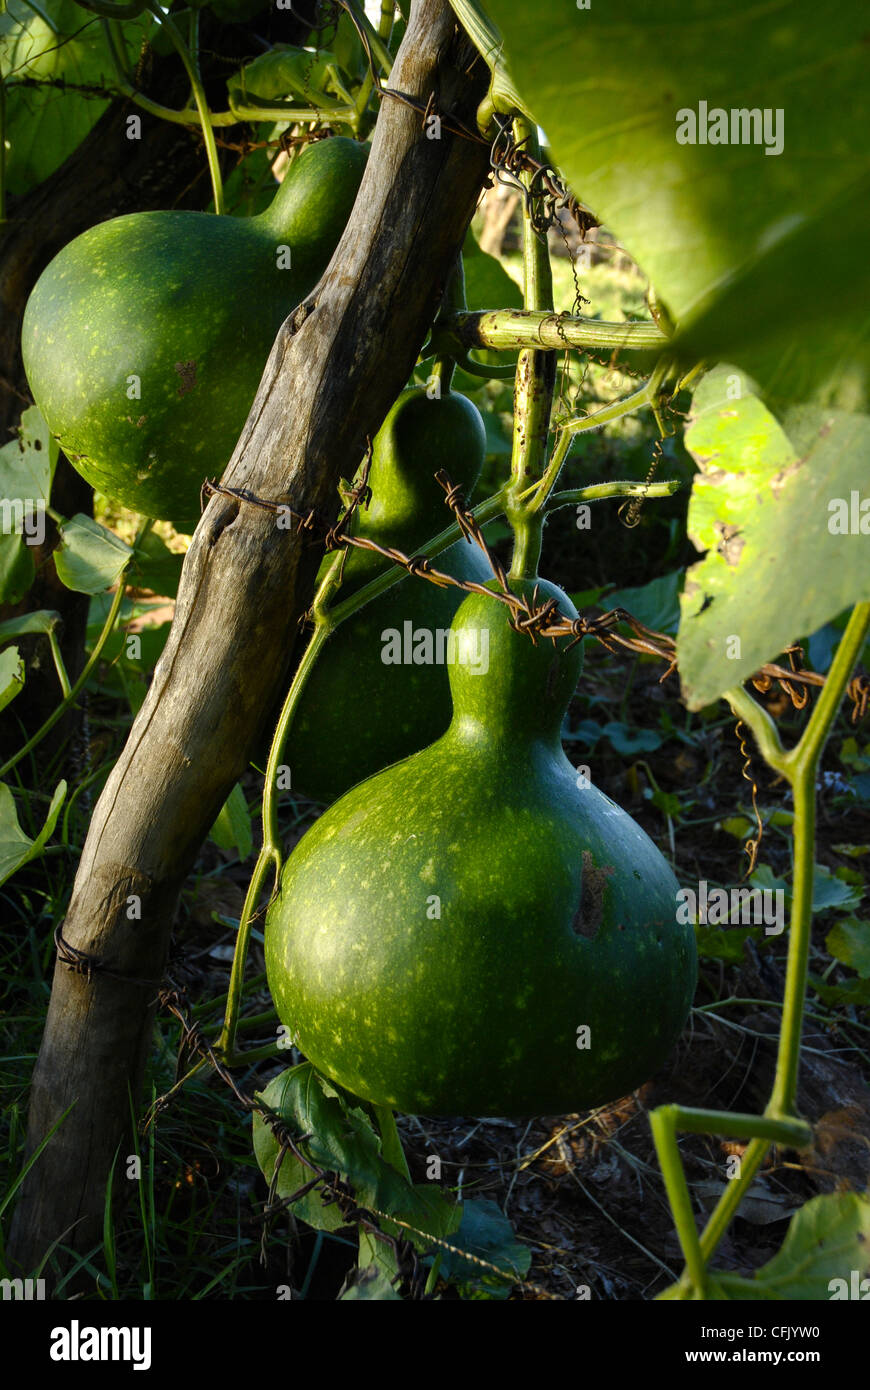 Kalebasse oder Flaschenkürbis Plantage, Mato Grosso do Sul, Brasilien Cabaca oder Cabaça Stockfoto